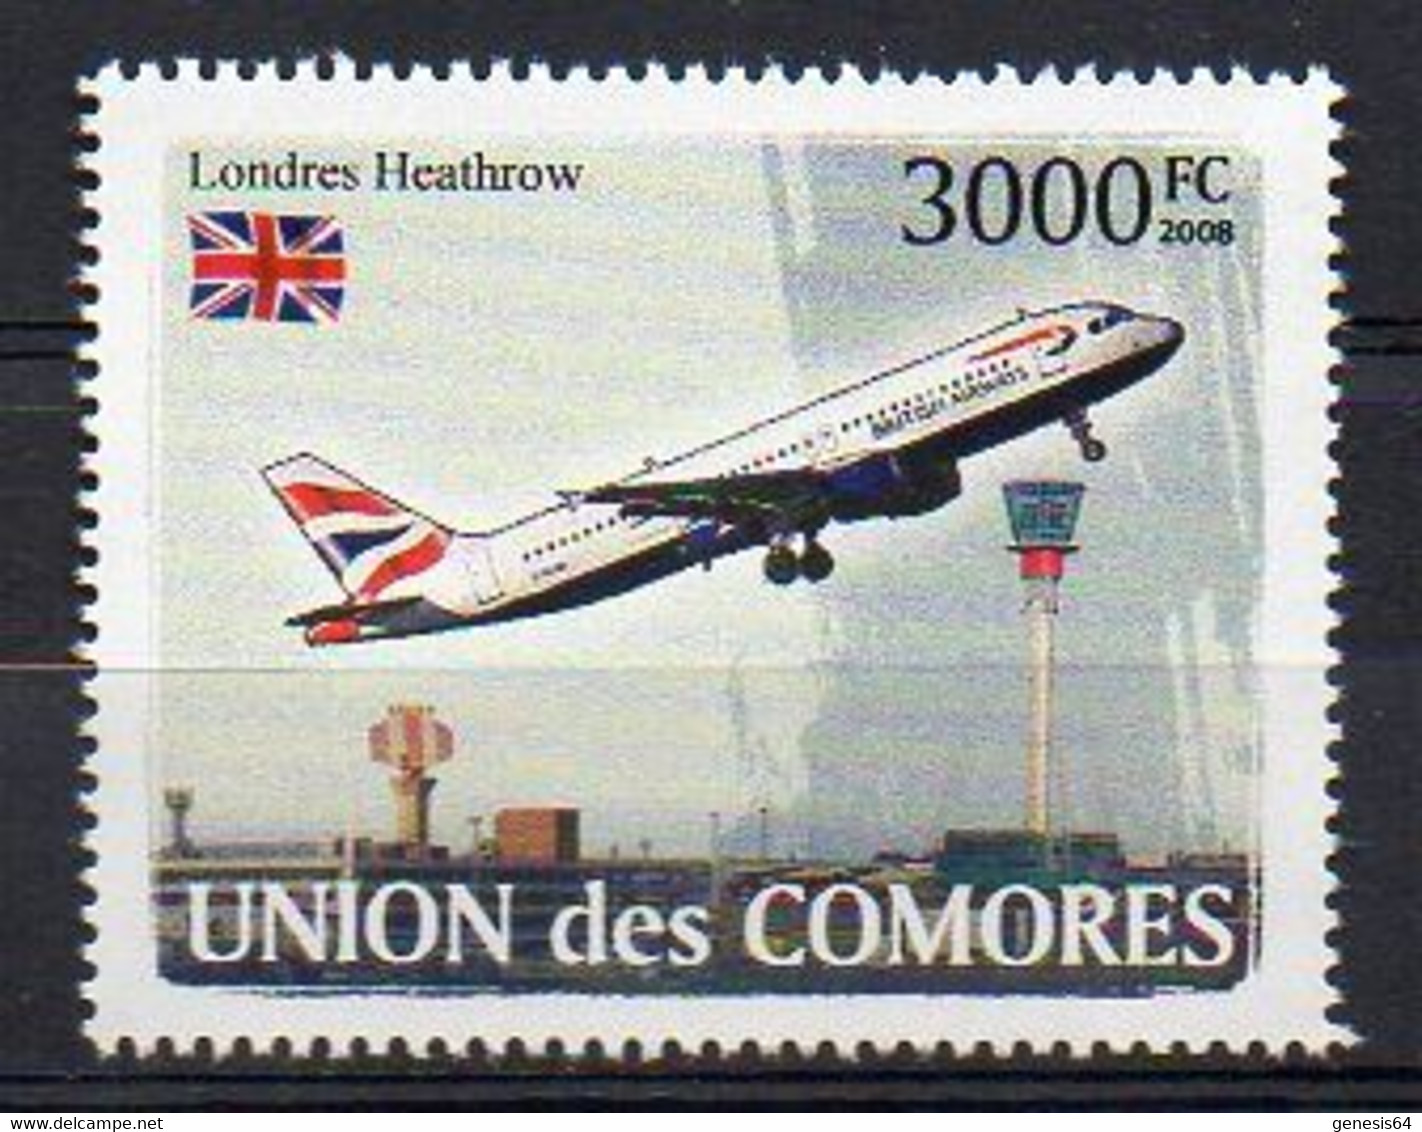 British Airways (BA) AIRBUS 318-100 Aircraft London Heathrow Airport Stamp (Comoros 2008) - MNH (1W2750) - Flugzeuge